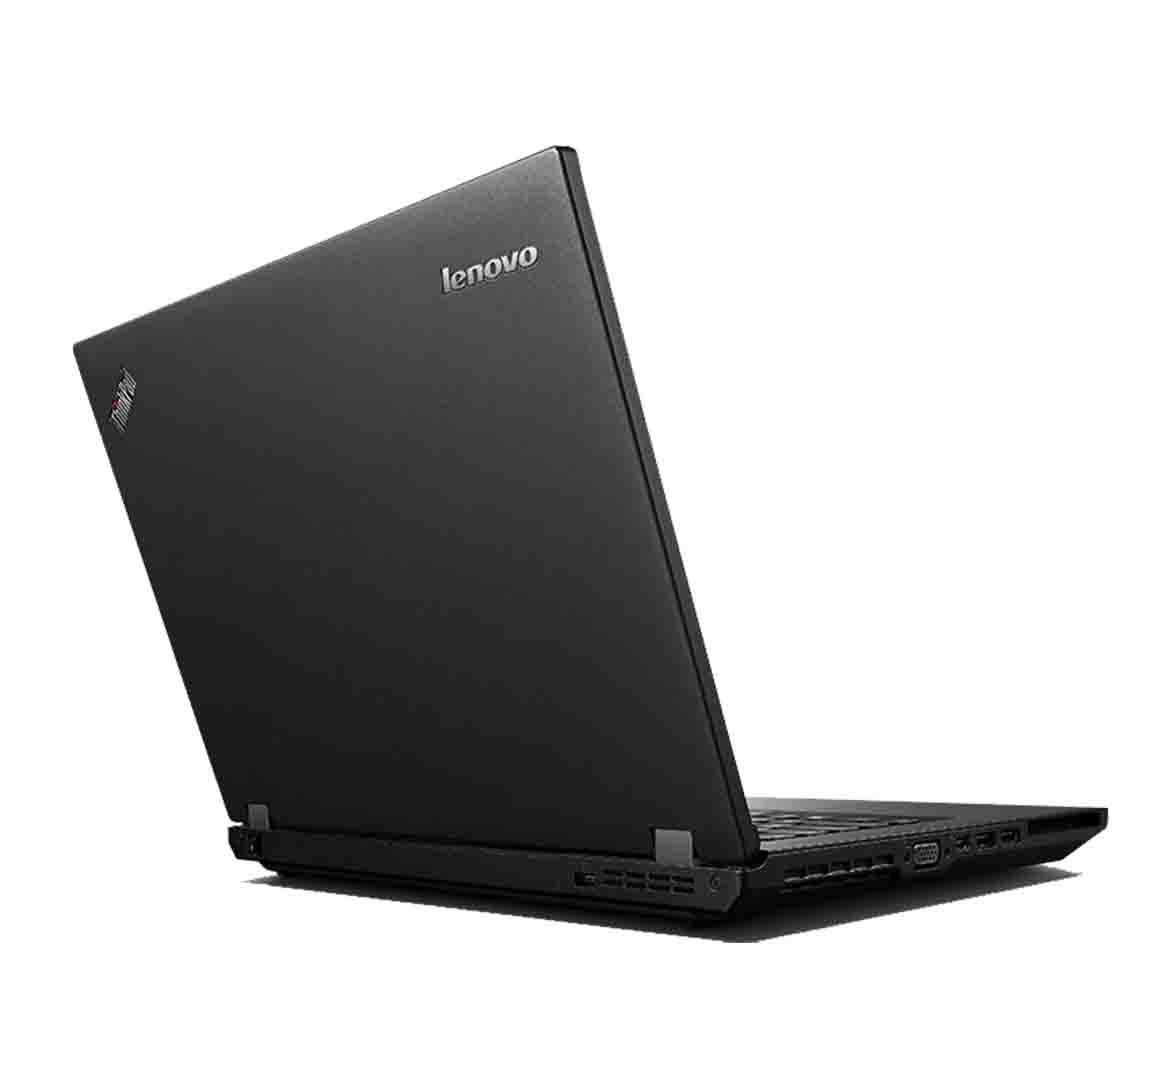 Lenovo Thinkpad L440 Business Laptop, Intel Core i5-4th Generation CPU, 8GB RAM, 256GB SSD, 14 inch Display, Windows 10 Pro, Refurbished Laptop